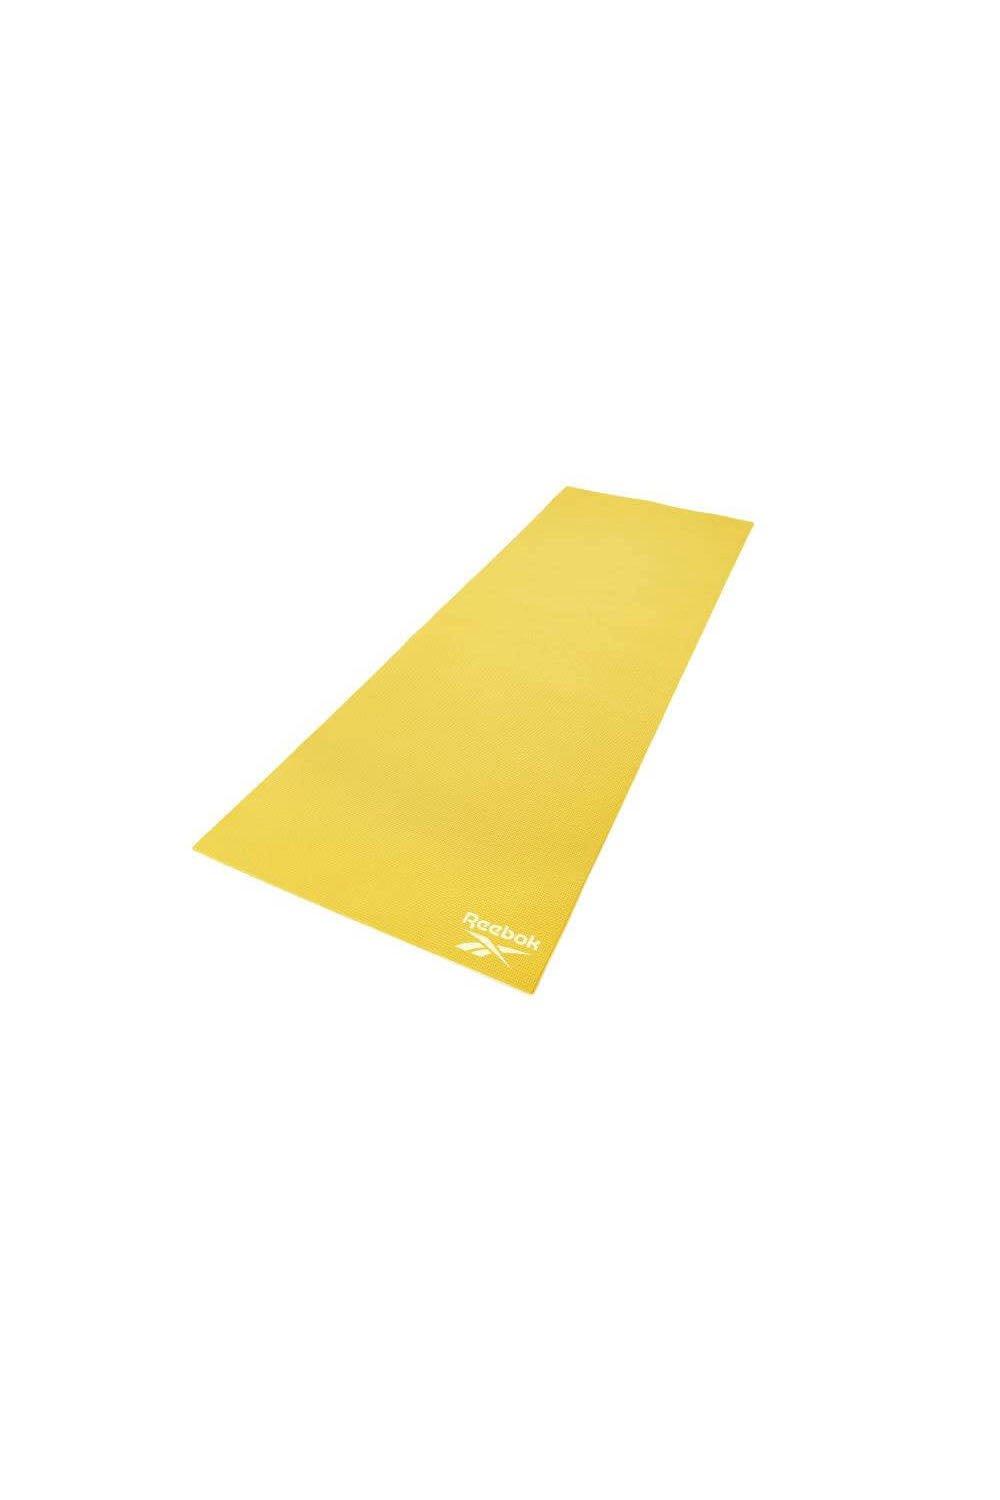 Reebok 4mm Yoga Mat|yellow